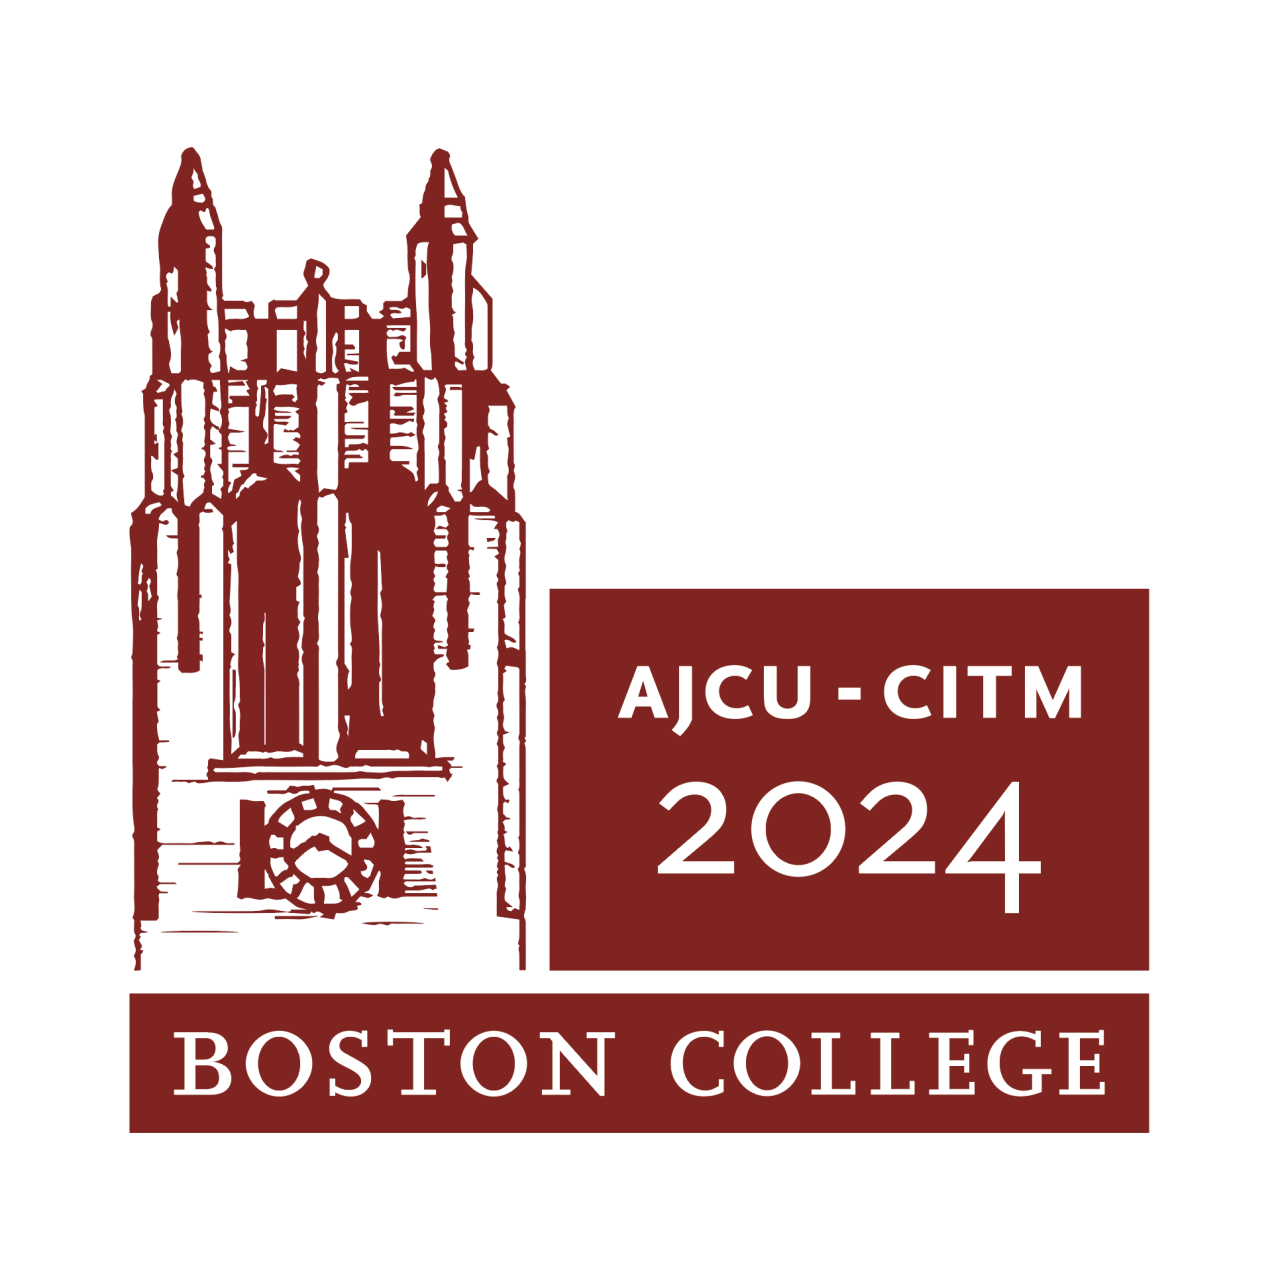 ACJU - CITM 2024 - Boston College